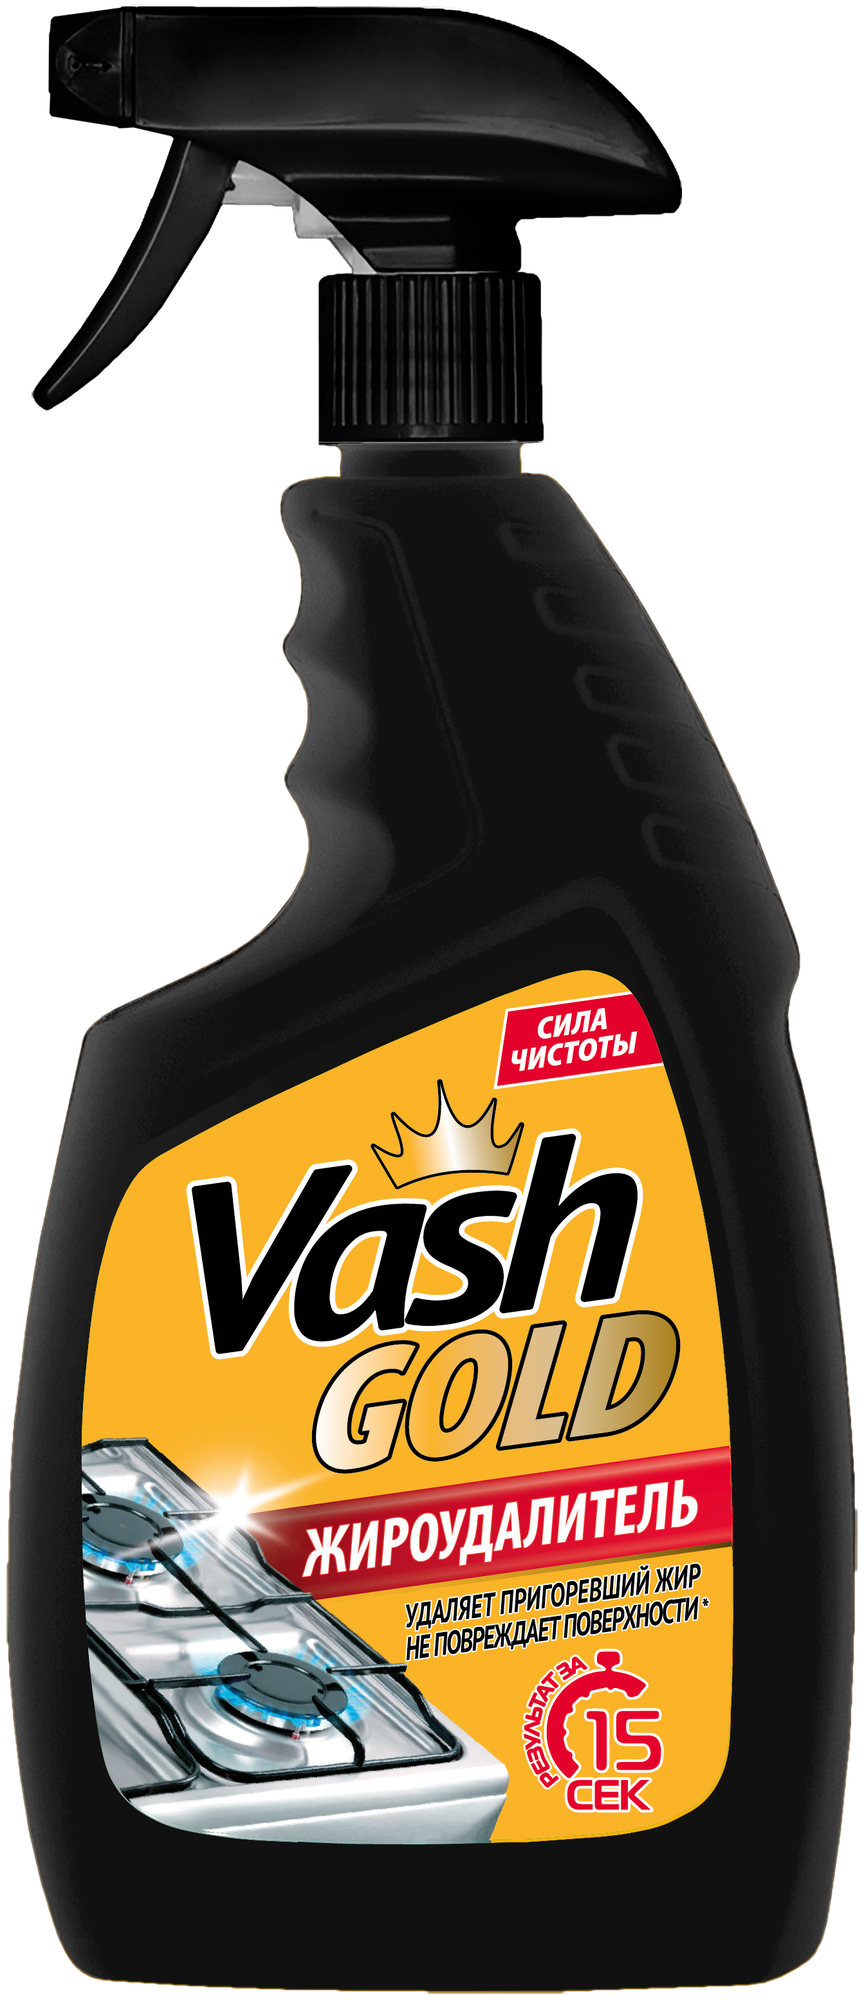 Vash Gold Жироудатель GOLD 750 мл спрей